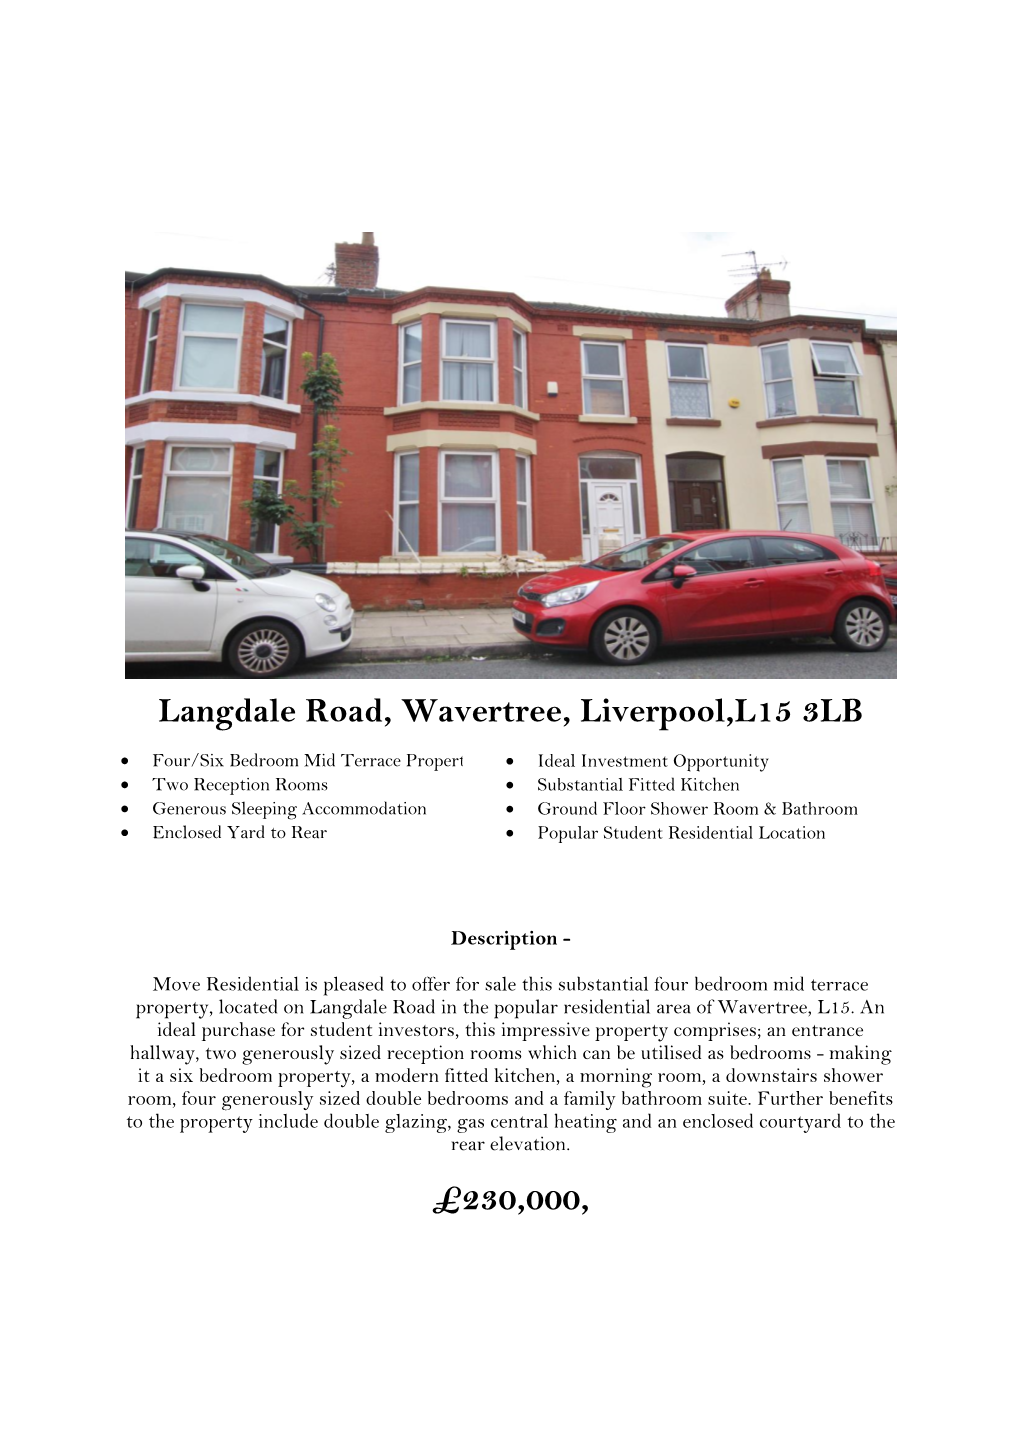 Langdale Road, Wavertree, Liverpool,L15 3LB £230,000